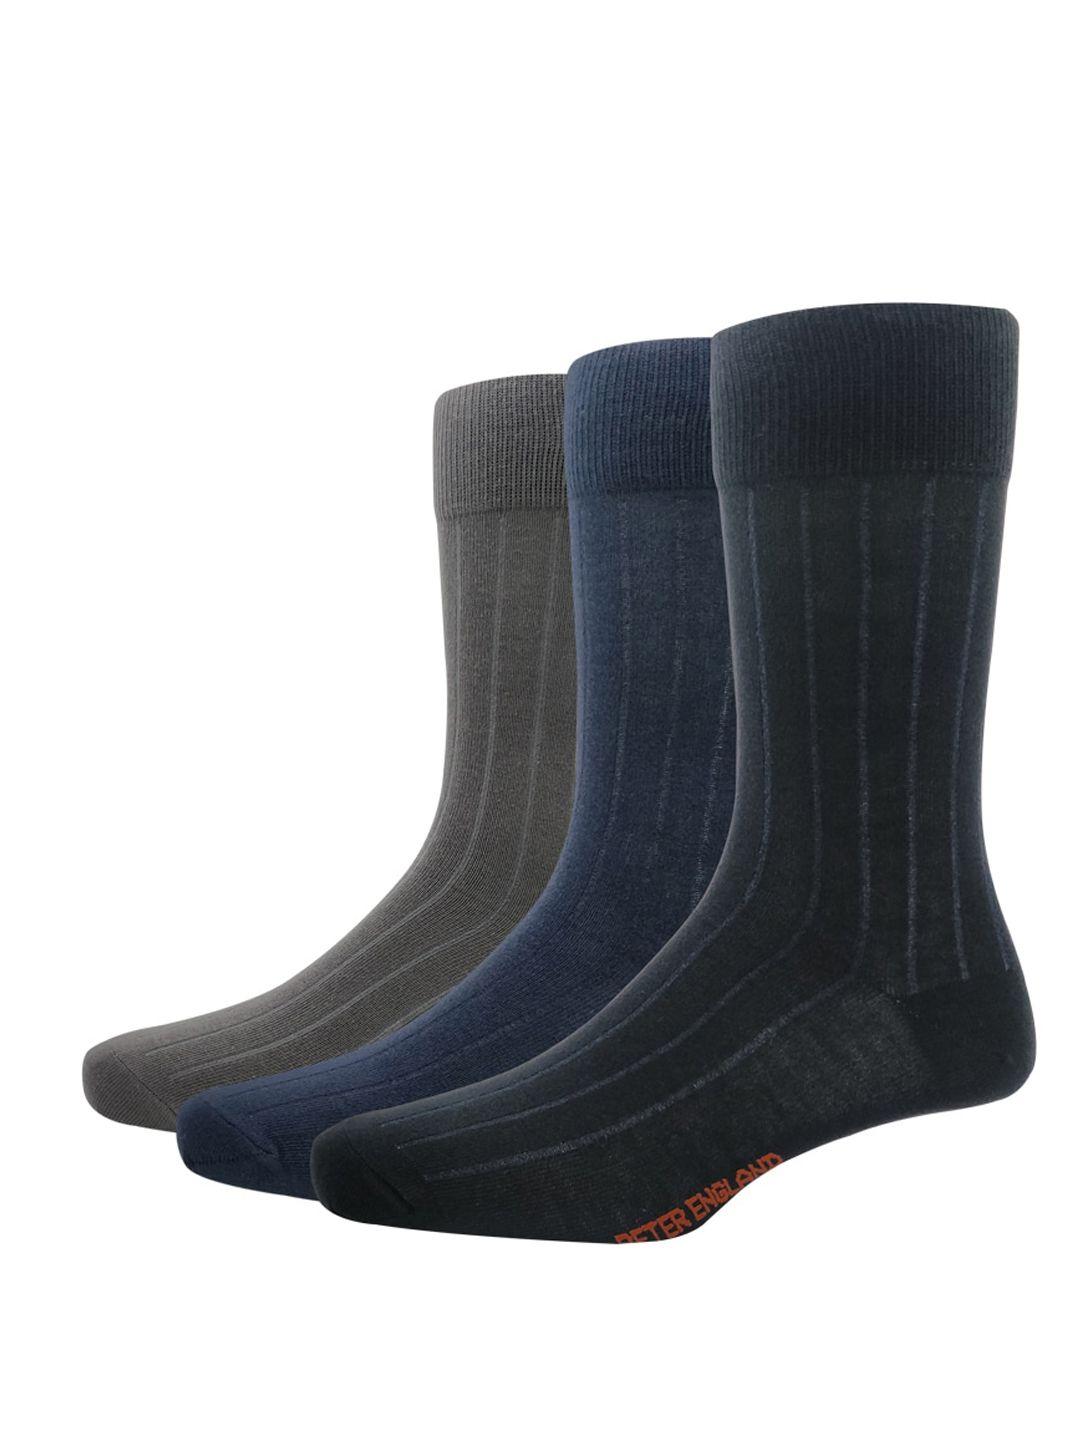 peter-england-men-pack-of-3-grey-&-blue-solid-calf-length-socks